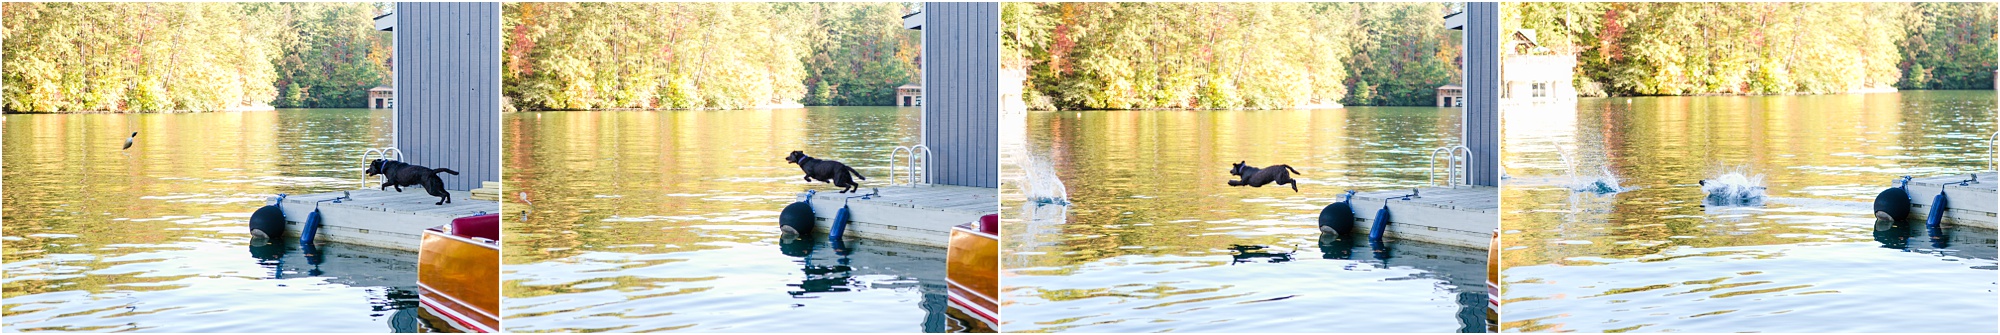 chocolate lab duck hunting swimming lake burton macon ga photographer